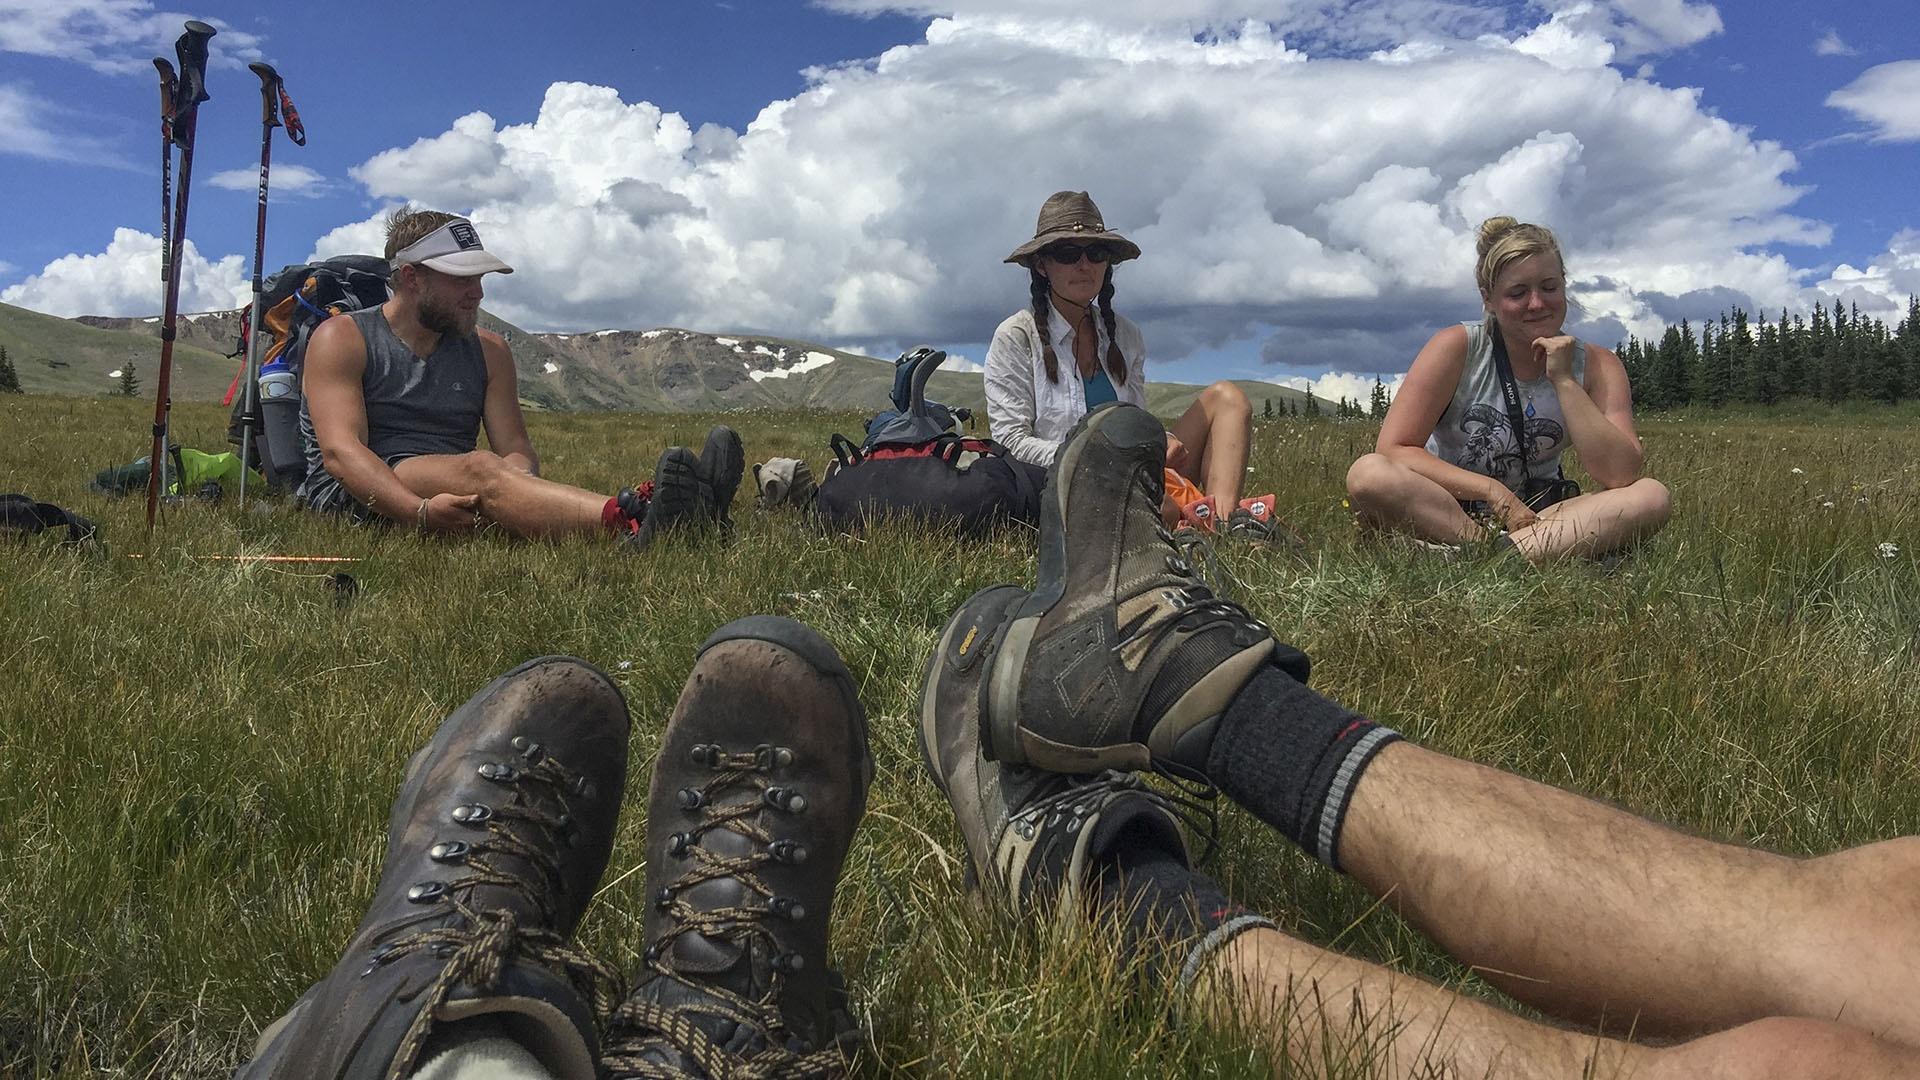 Peter Stegen, Lindsay Dalton and friends sitting in grassy area.